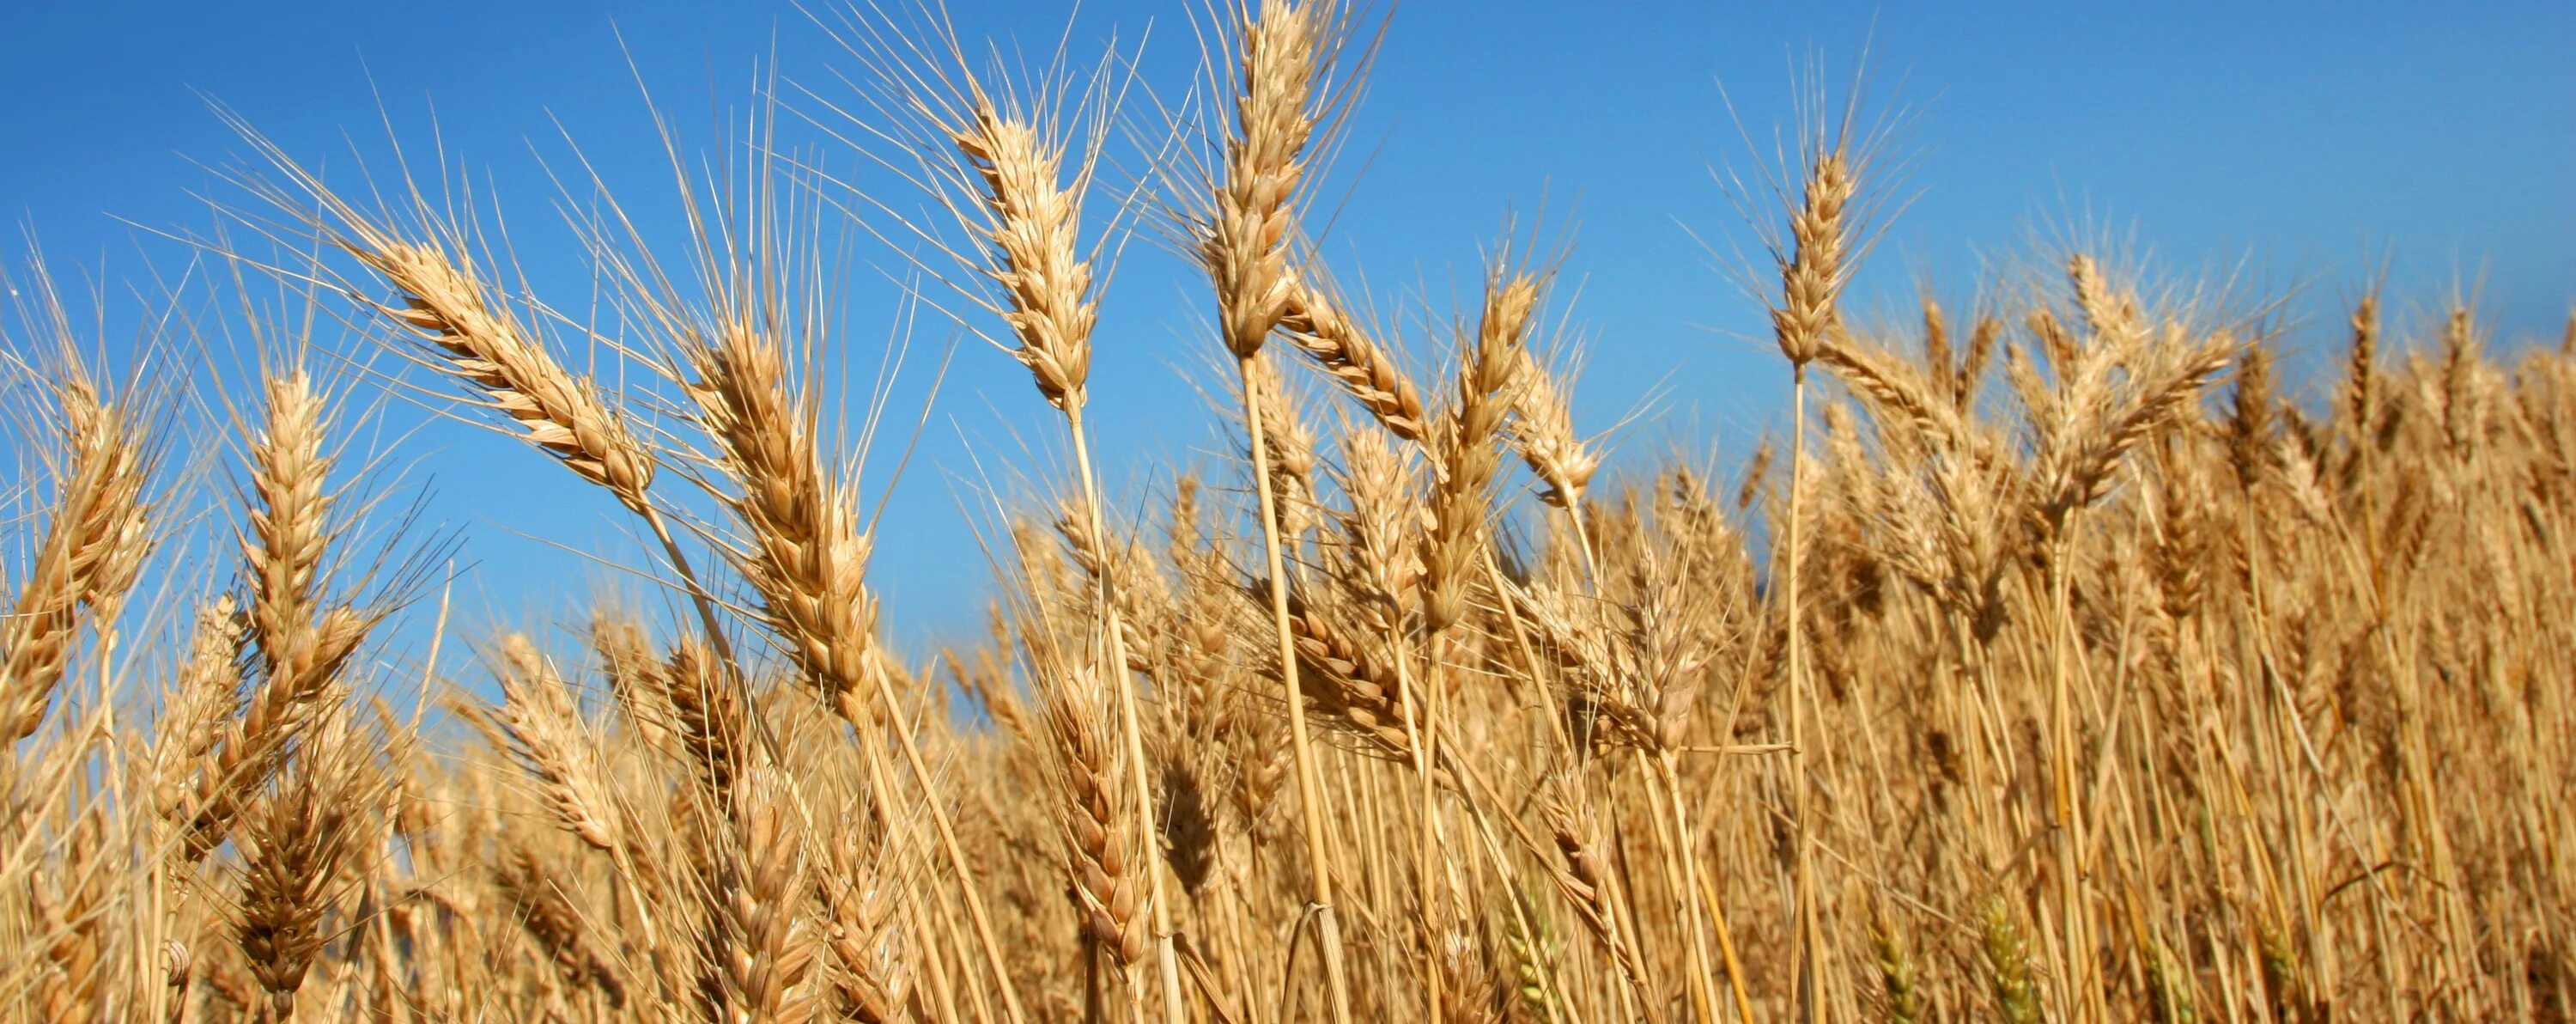 Пшеница дурум. Пшеница Кыргызстан. Сладкая пшеница. Wheat группа. Пшеница группа организмов